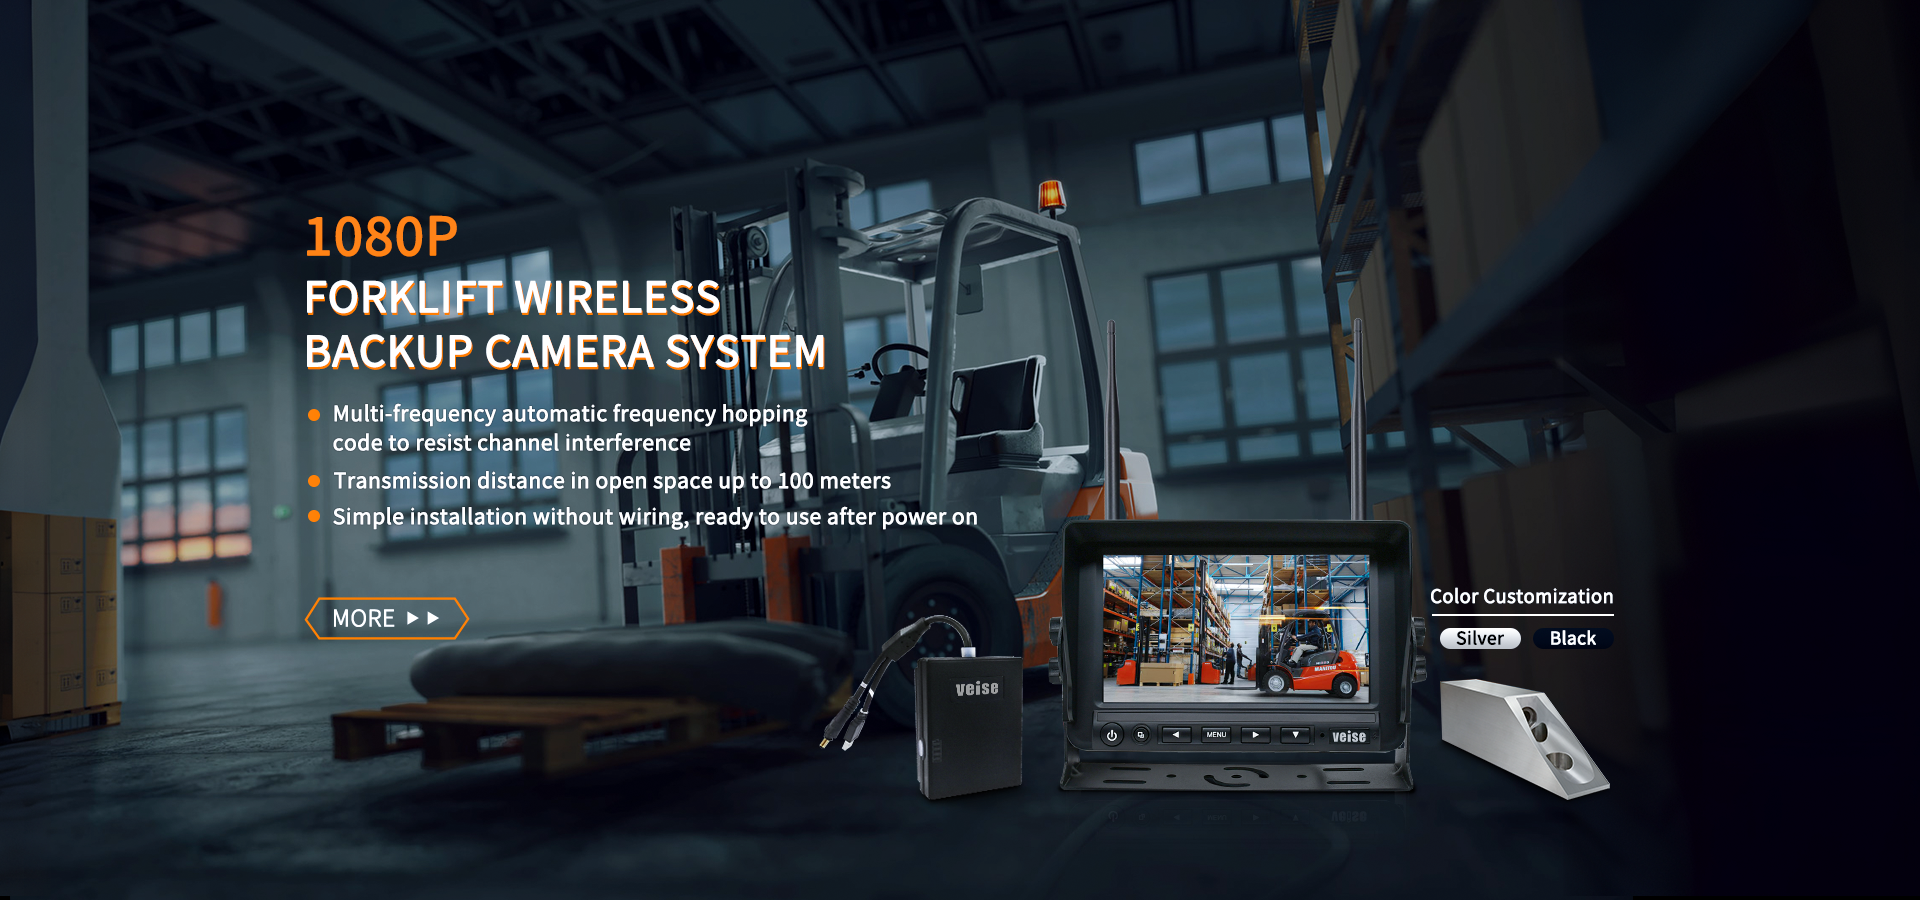 Forklift Wireless Backup Camera System